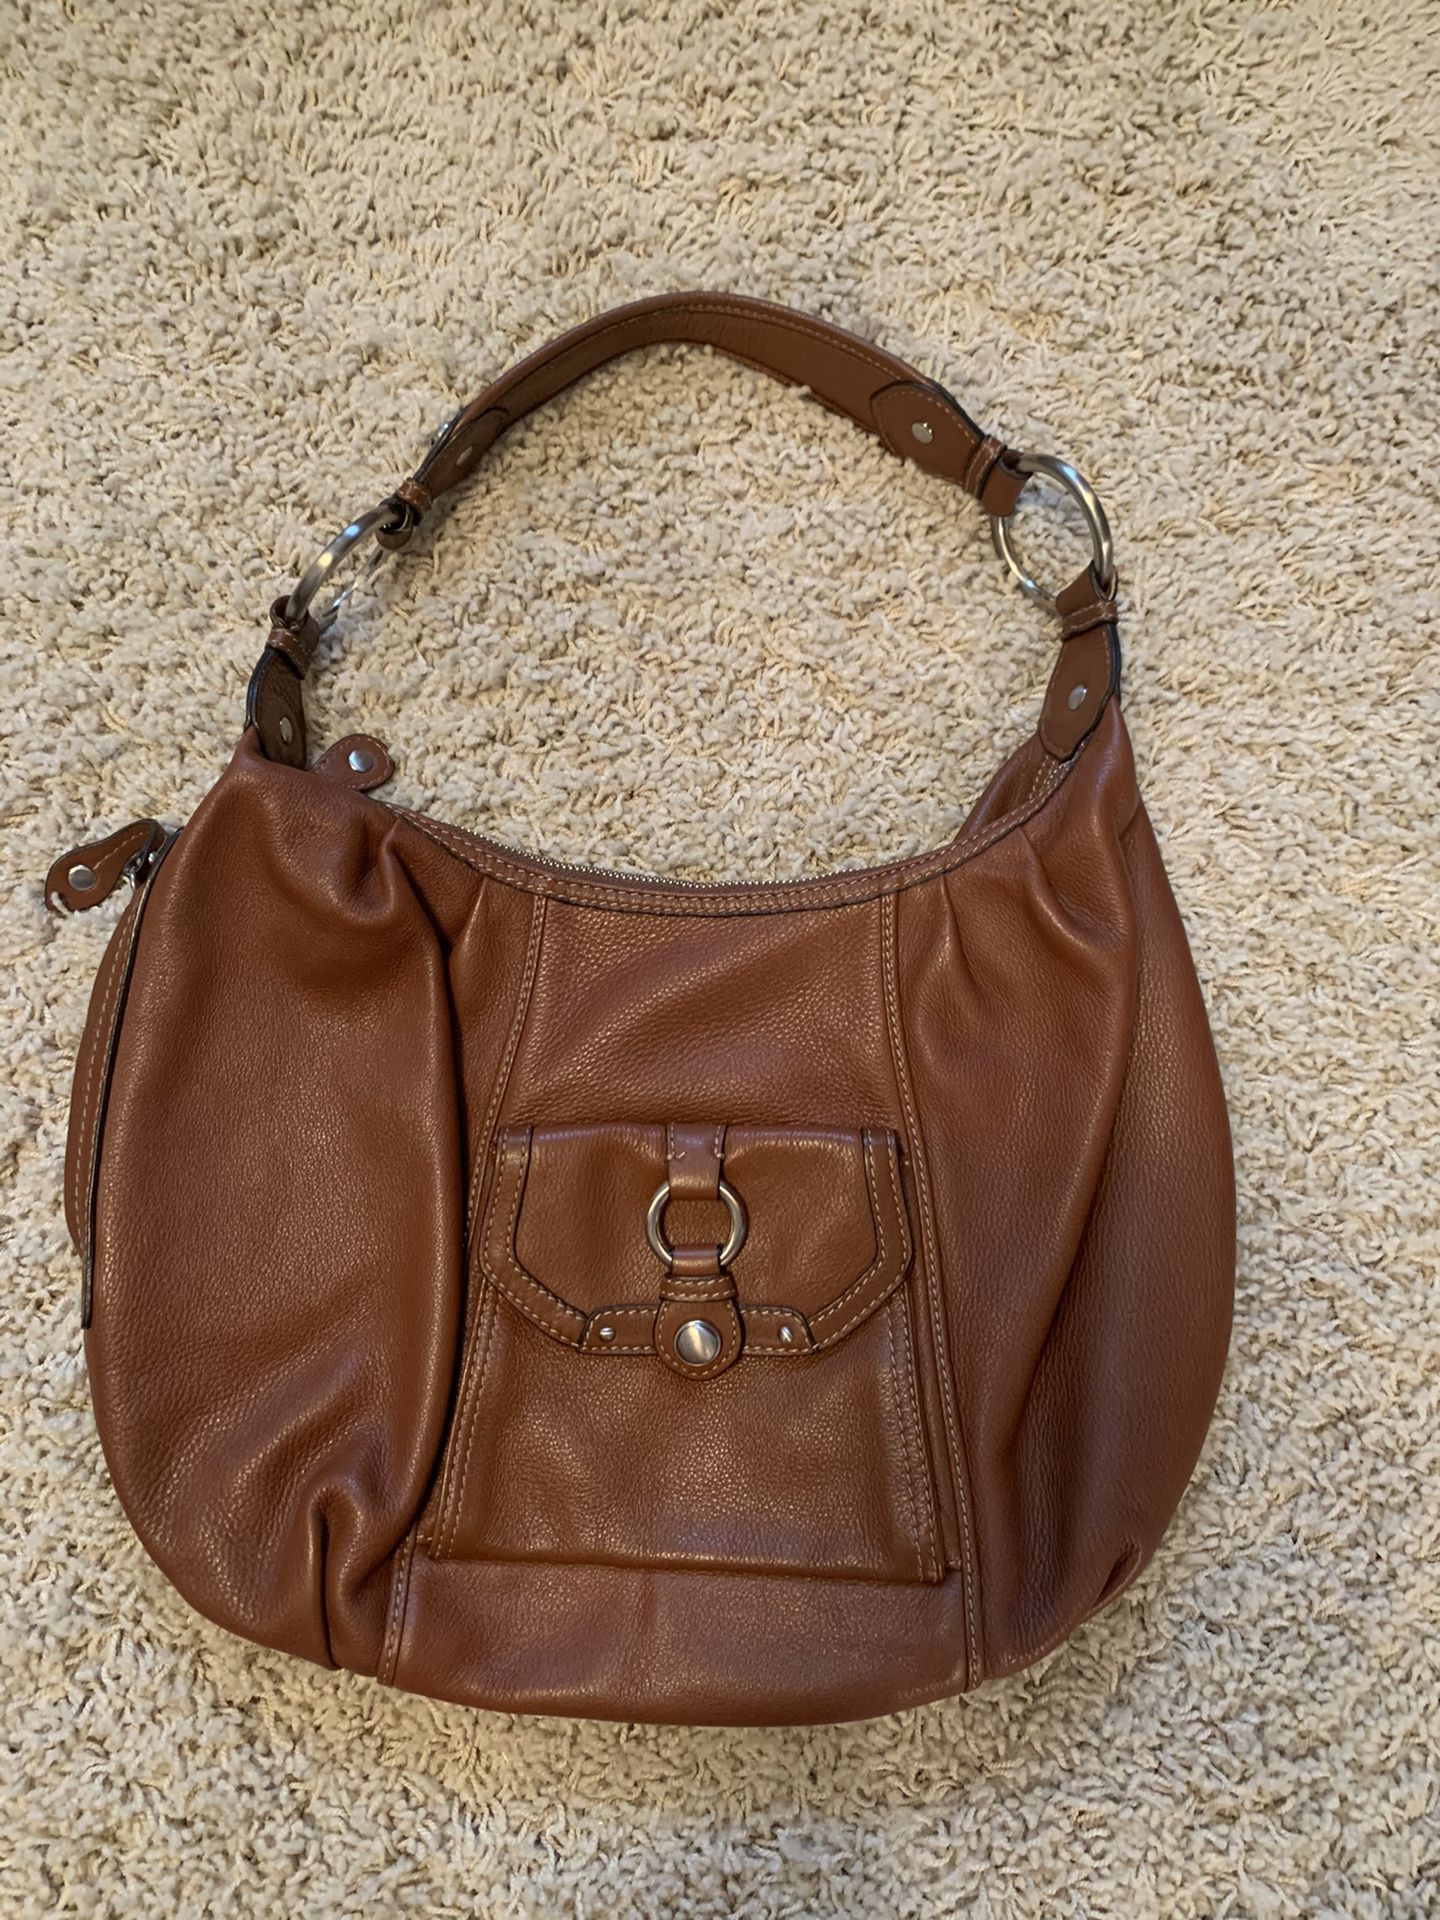 Women’s Leather bag purse tote brand B Makowsky